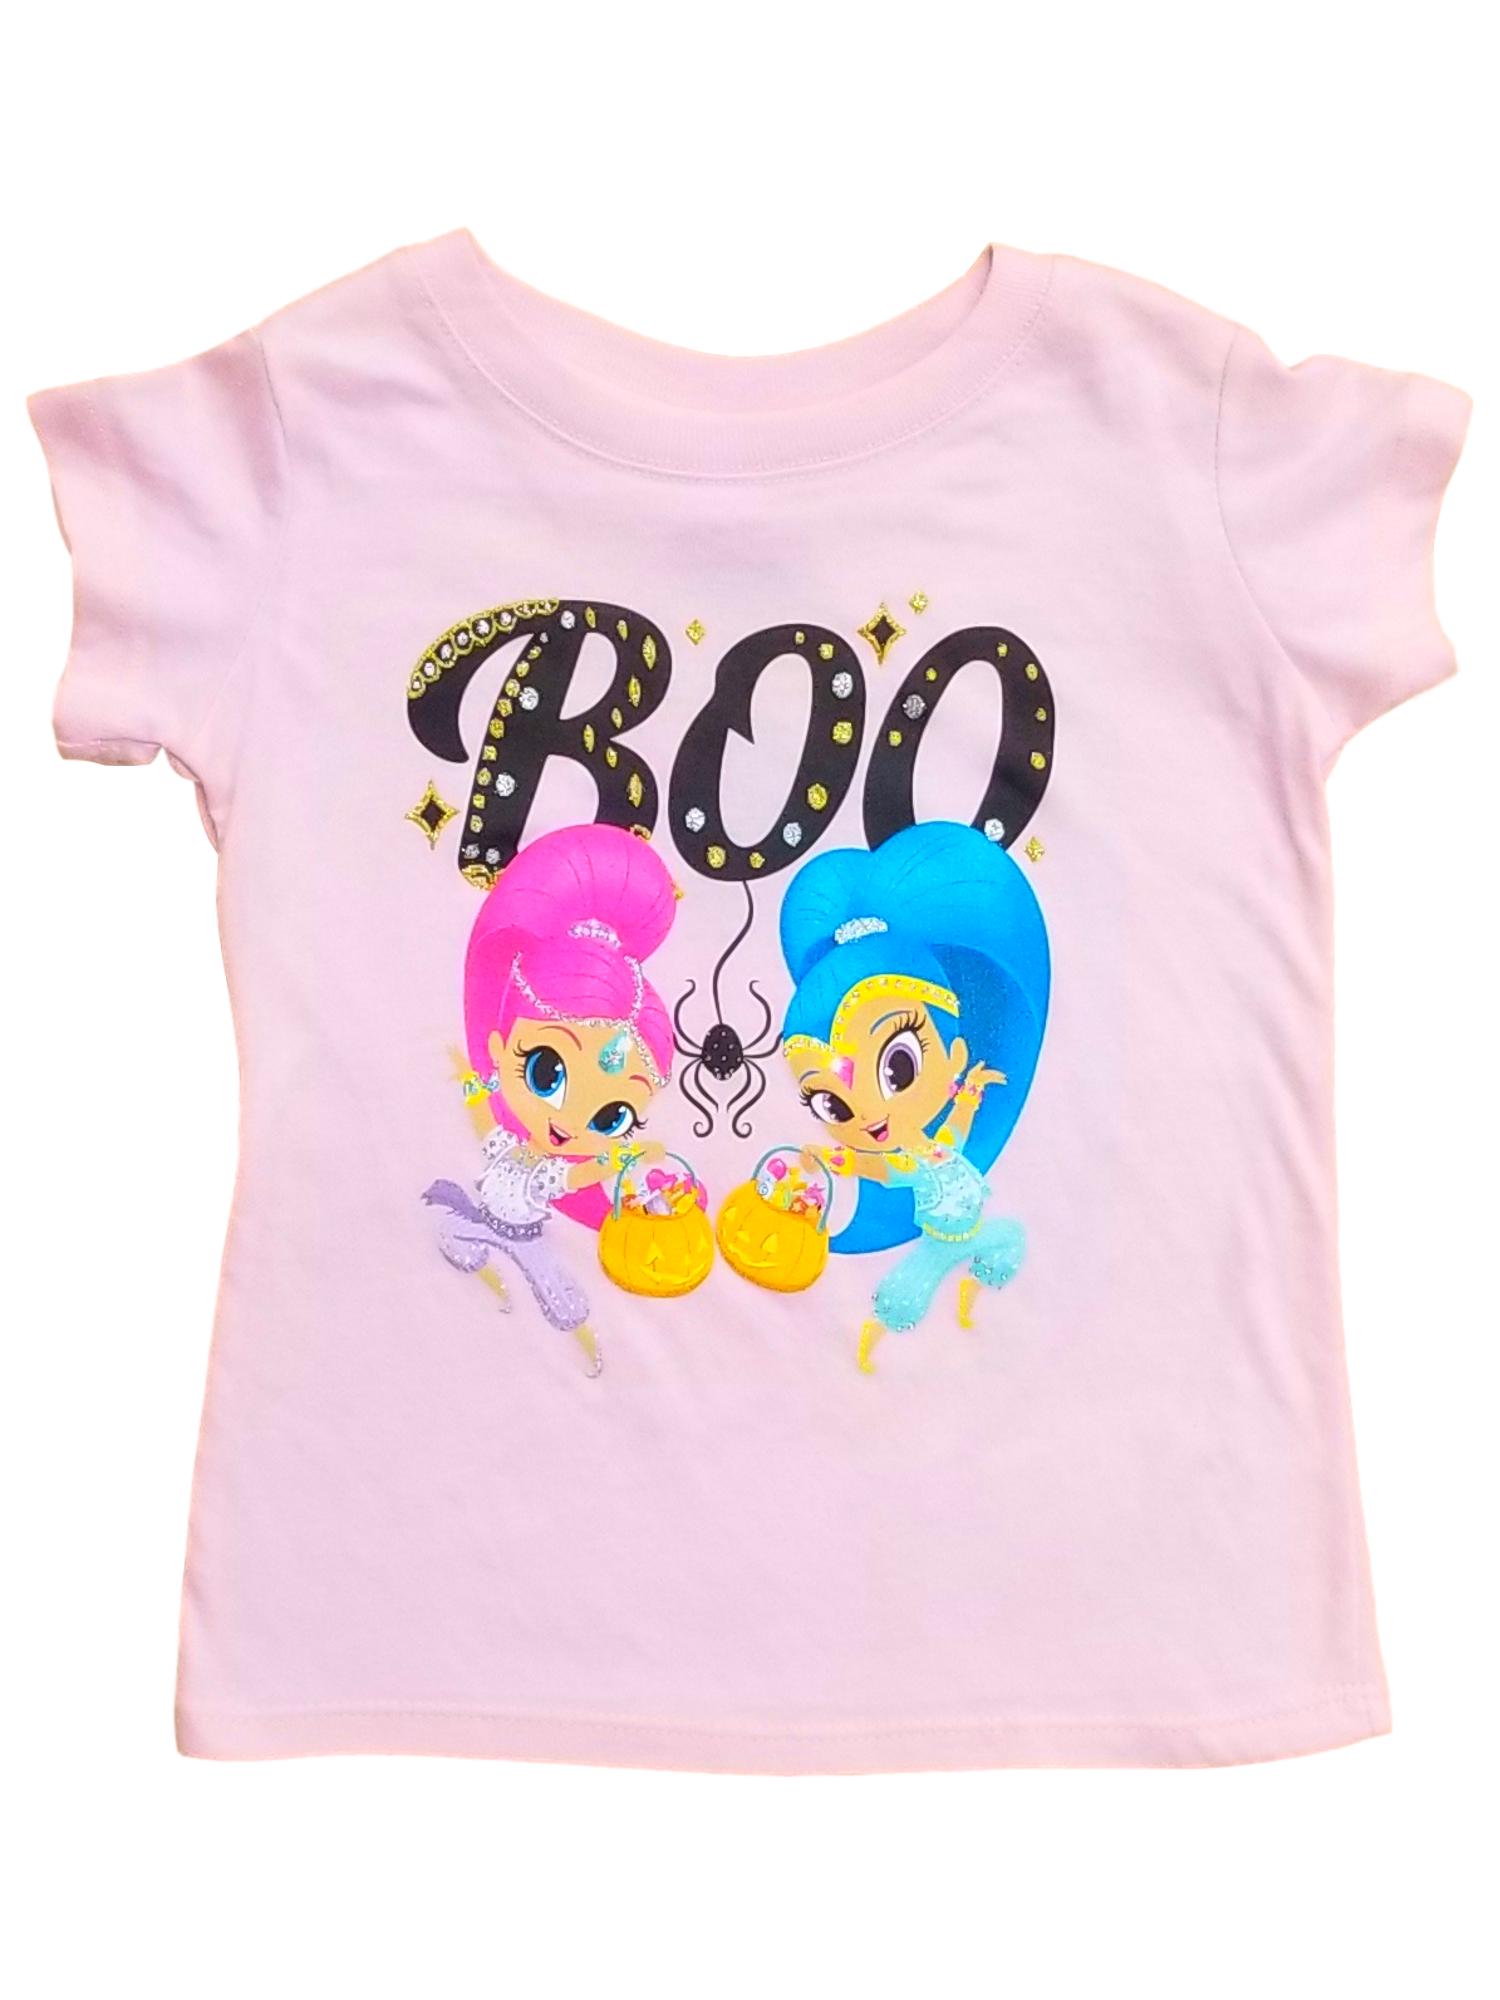 Nickelodeon Shimmer & Shine Toddler Girls Pink Halloween Genie Tee T-Shirt Shirt 3T